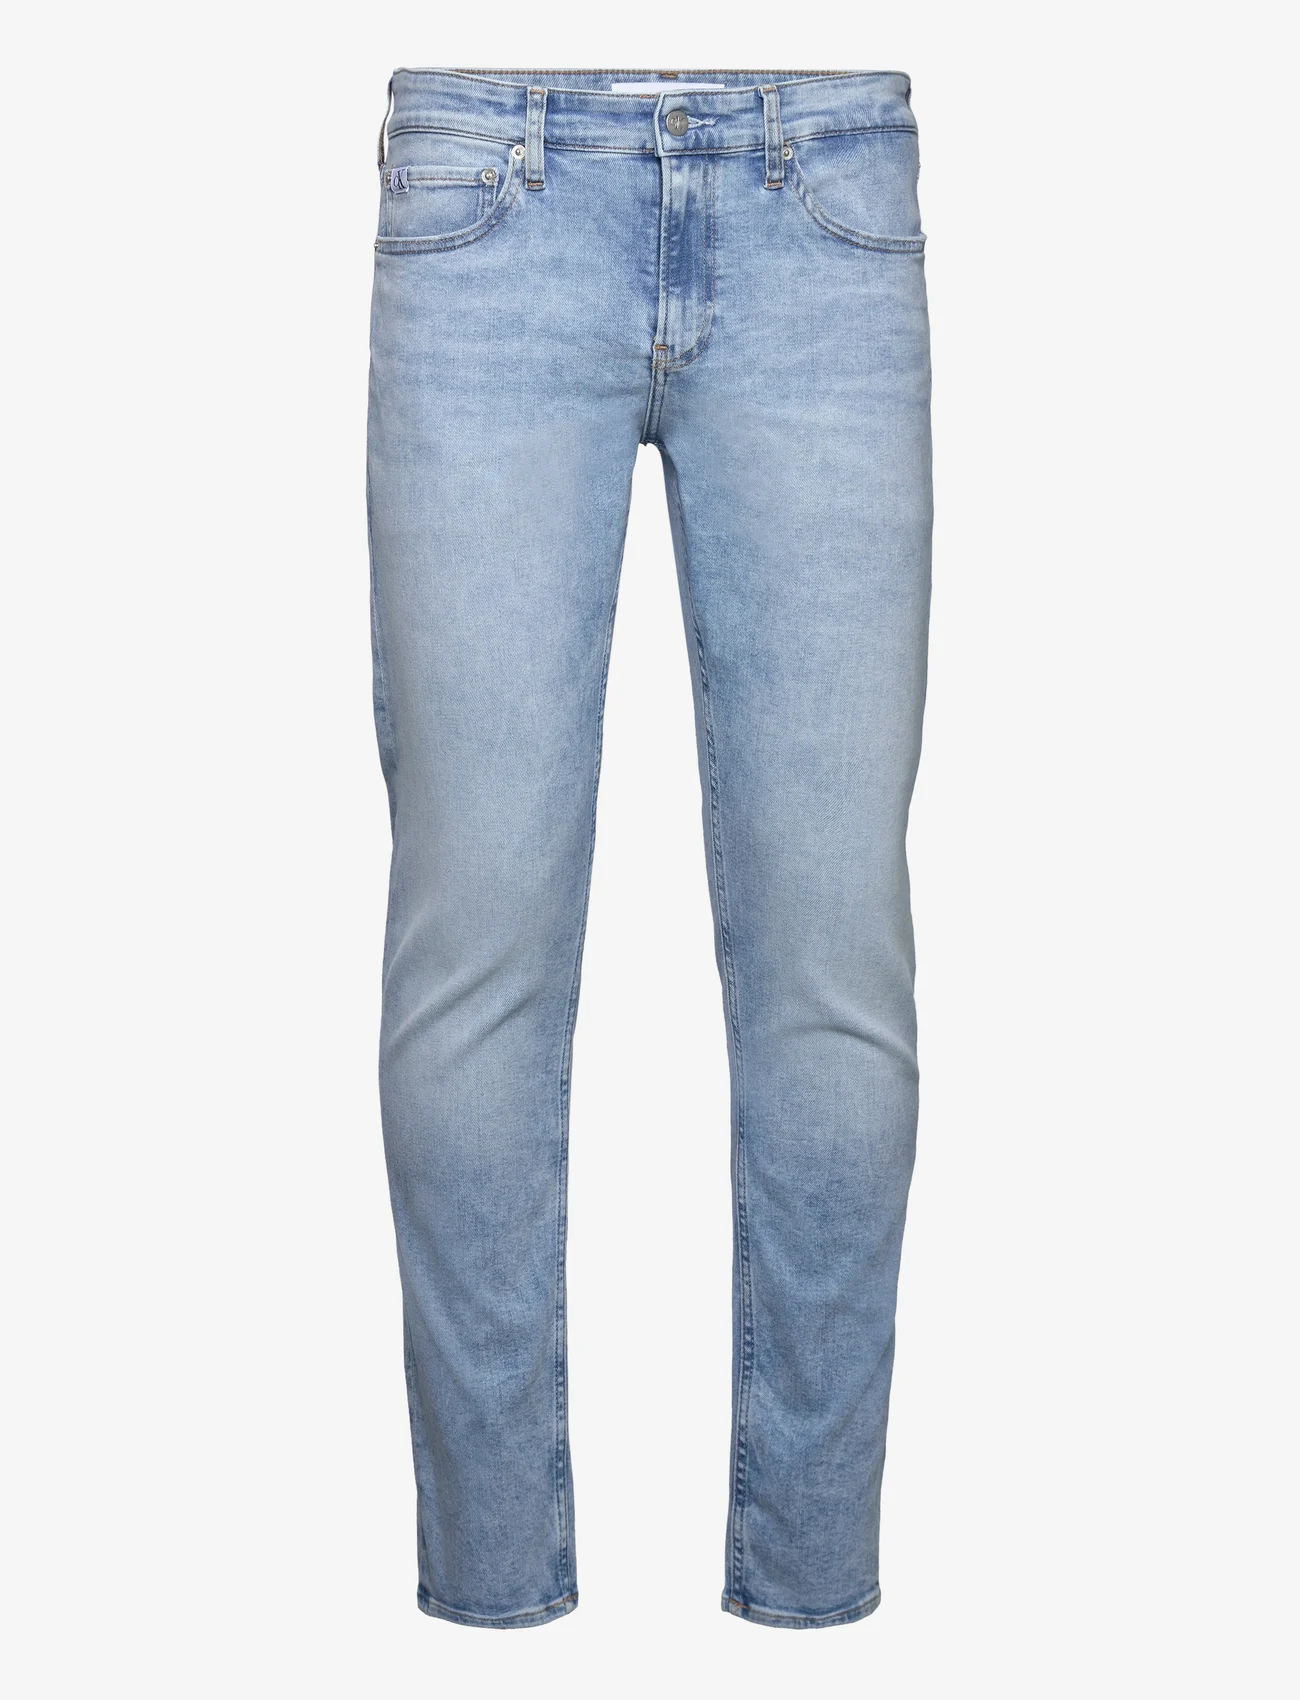 Calvin Klein Jeans - SLIM - slim jeans - denim light - 0